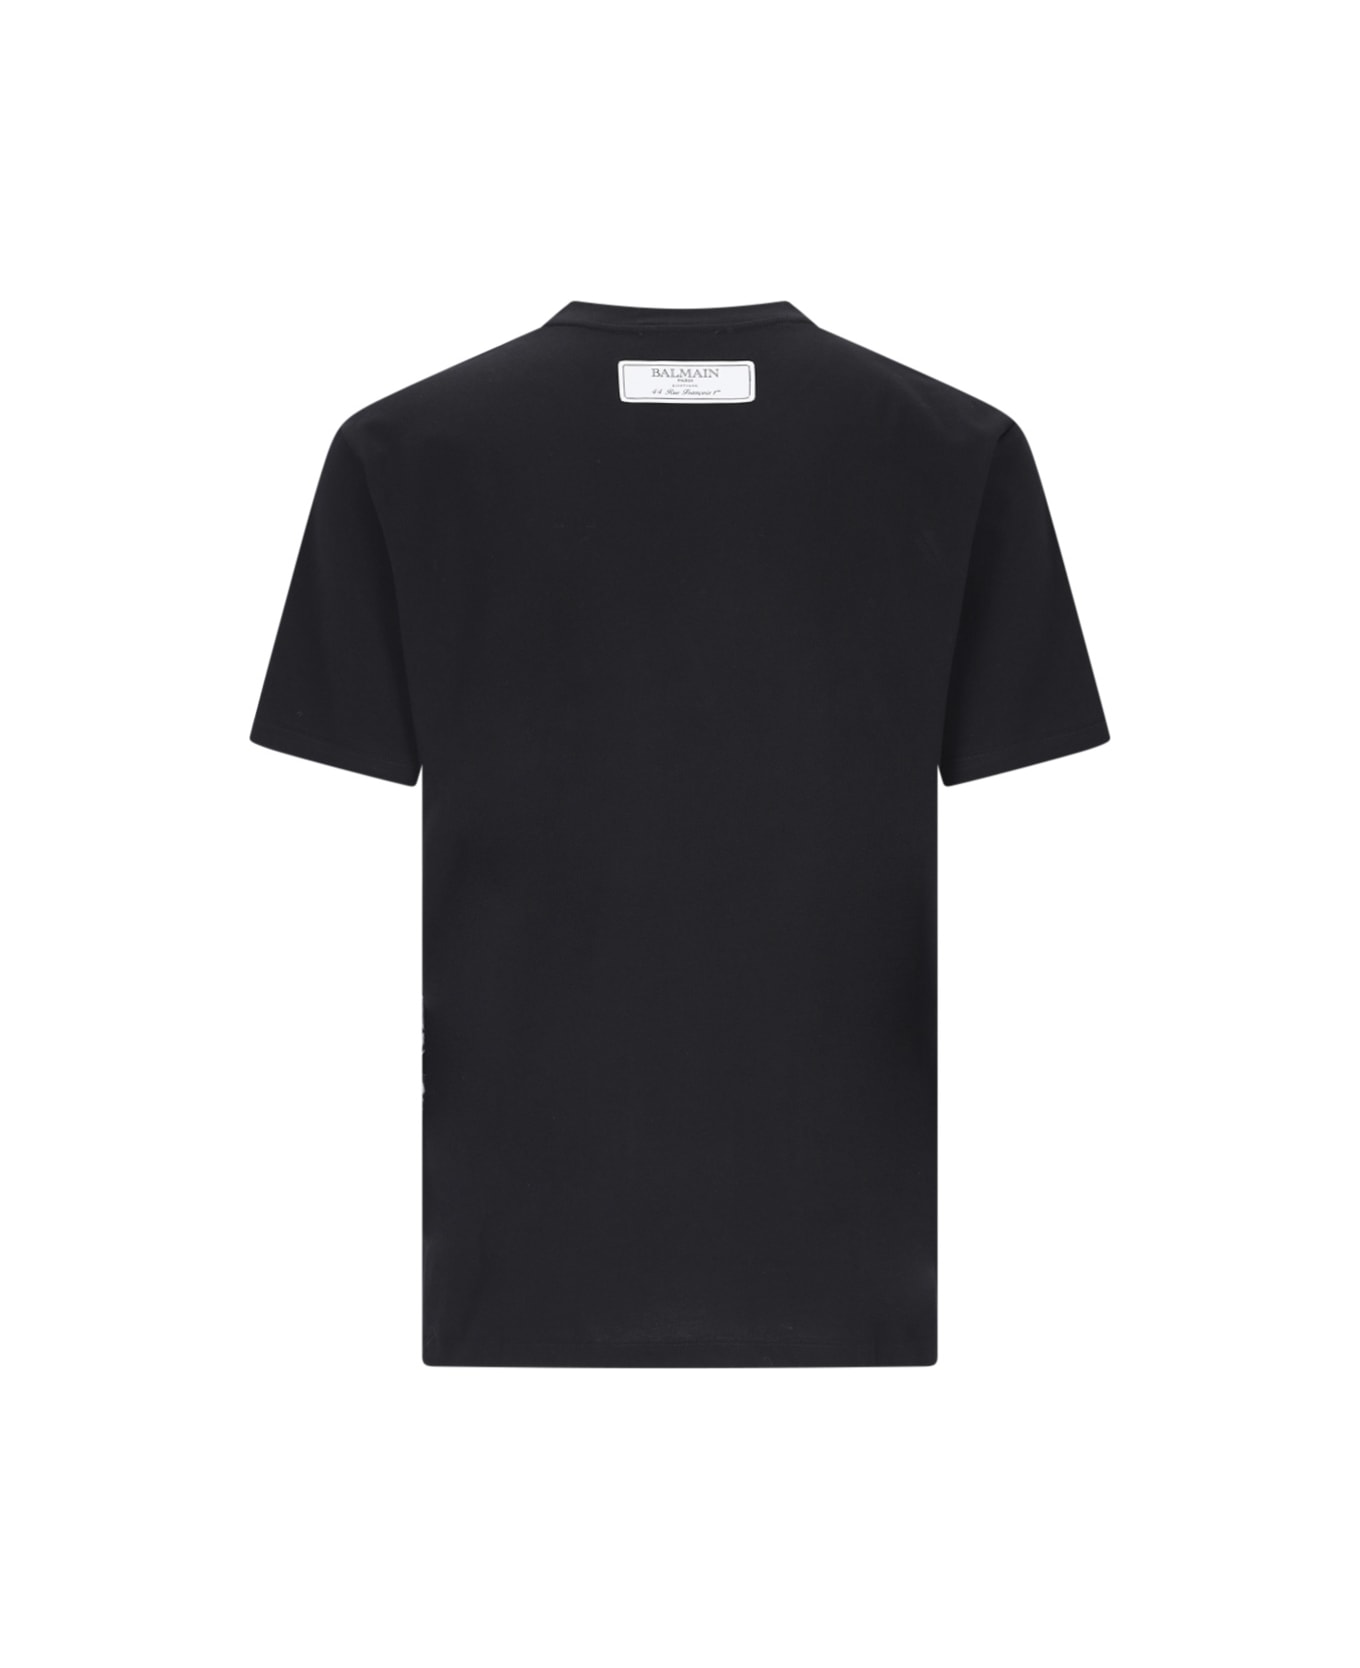 Balmain Printed T-shirt - Noir/multi gris